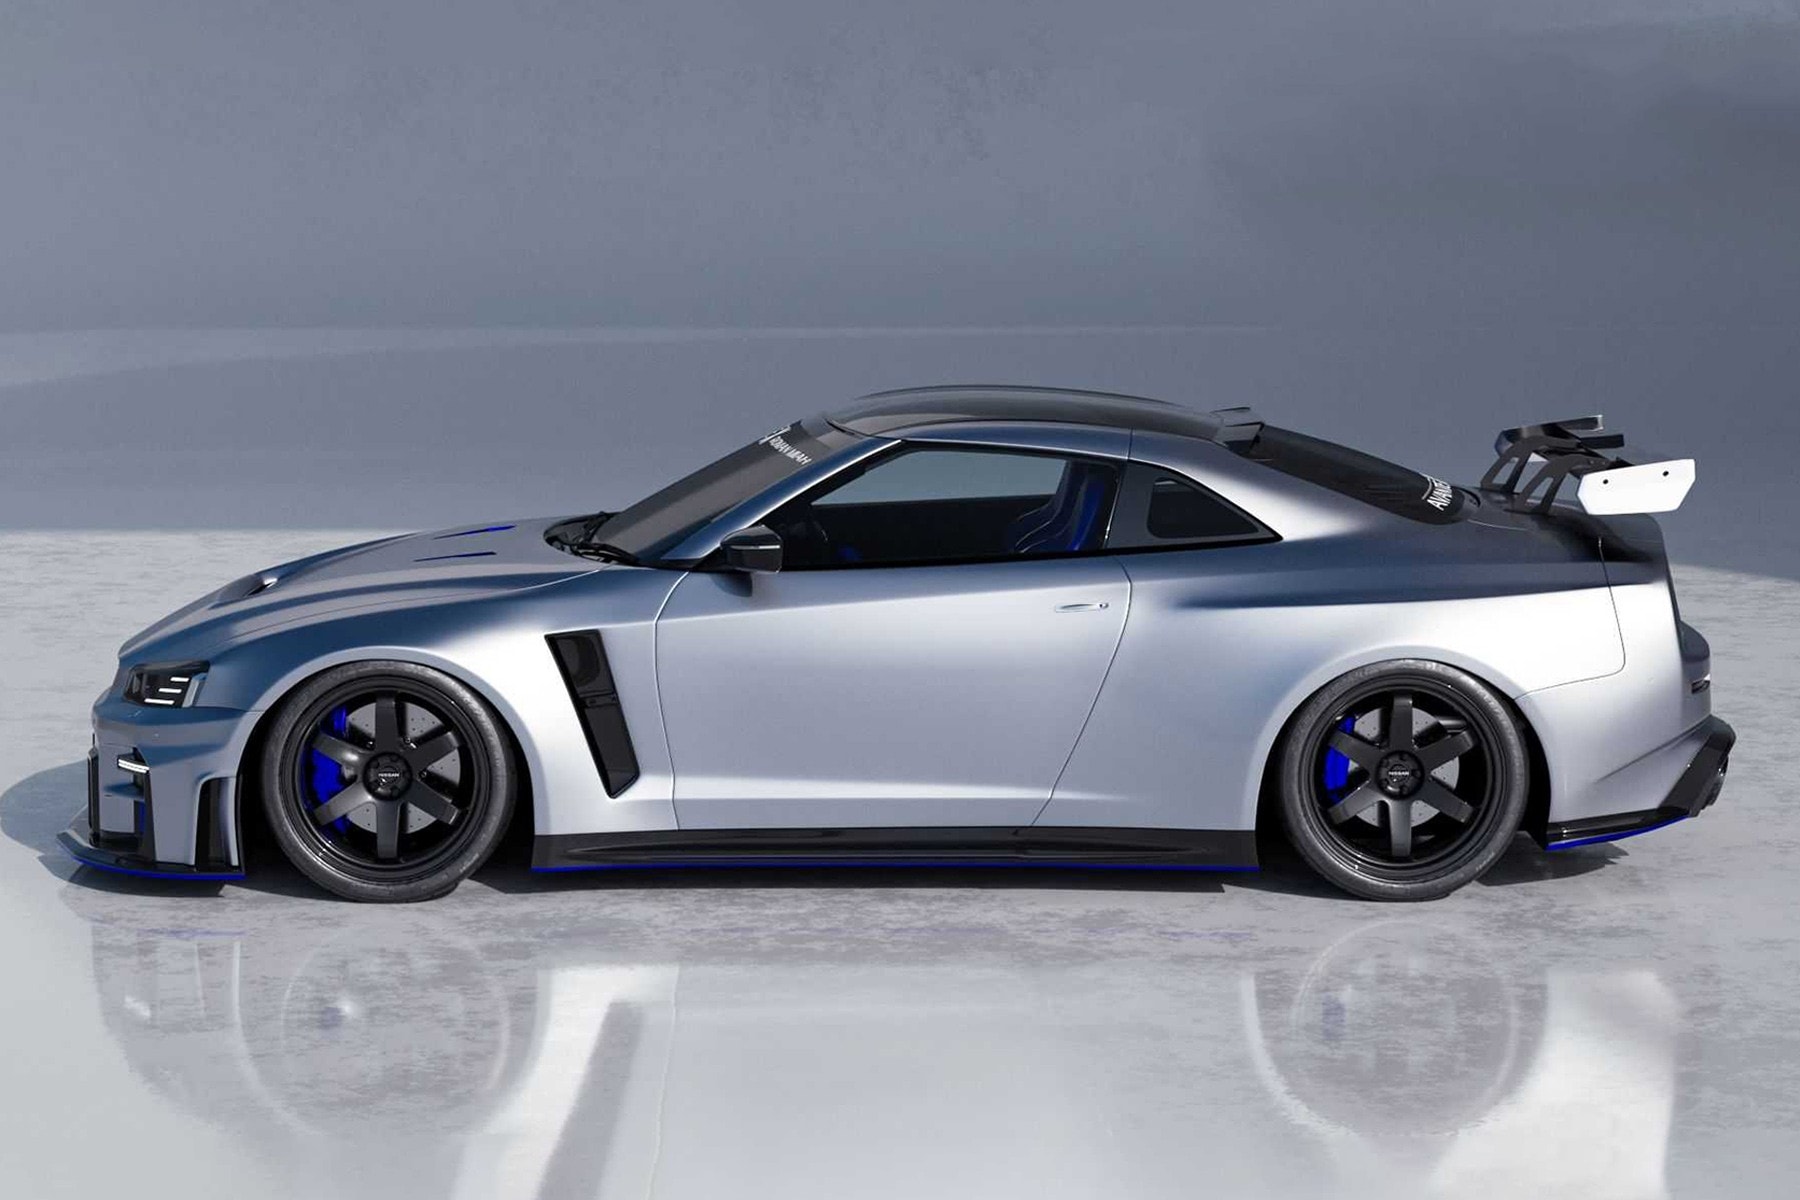 2023 R36 Nissan Skyline GT-R concept by Roman Miah and Avante Design-5 -  Paul Tan's Automotive News